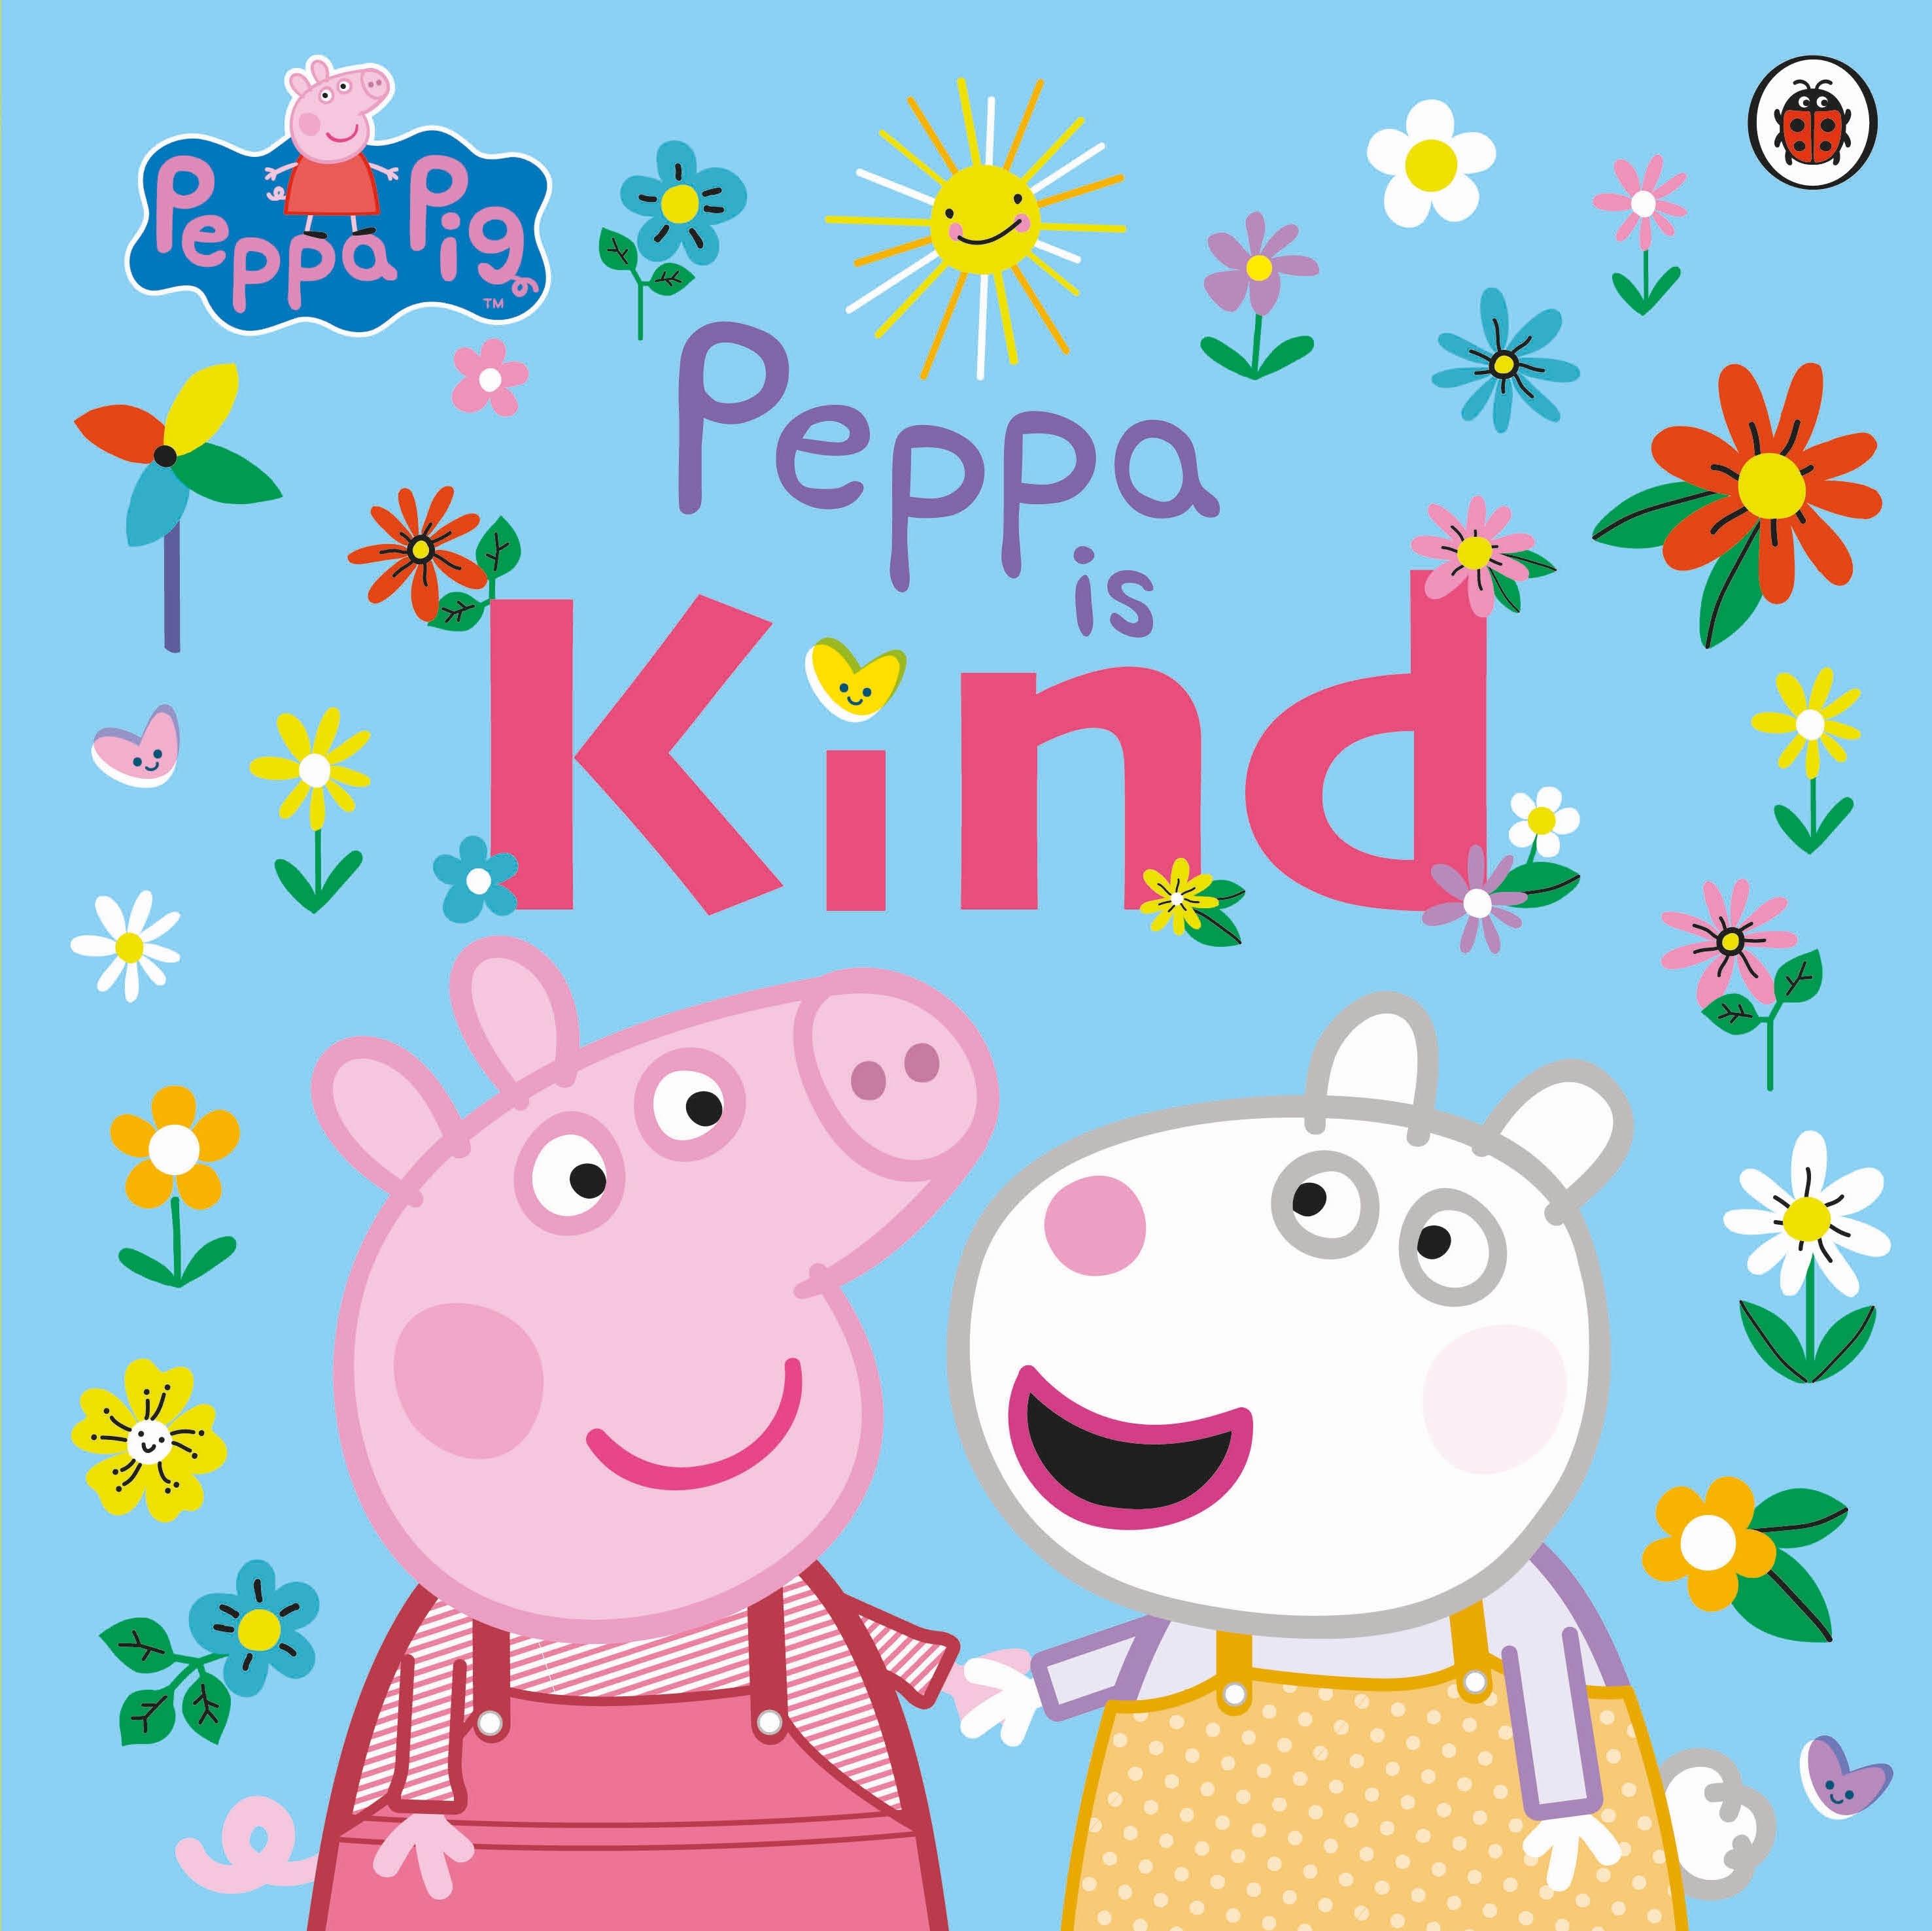 Peppa Pig: Peppa Is Kind by Peppa Pig - Penguin Books Australia